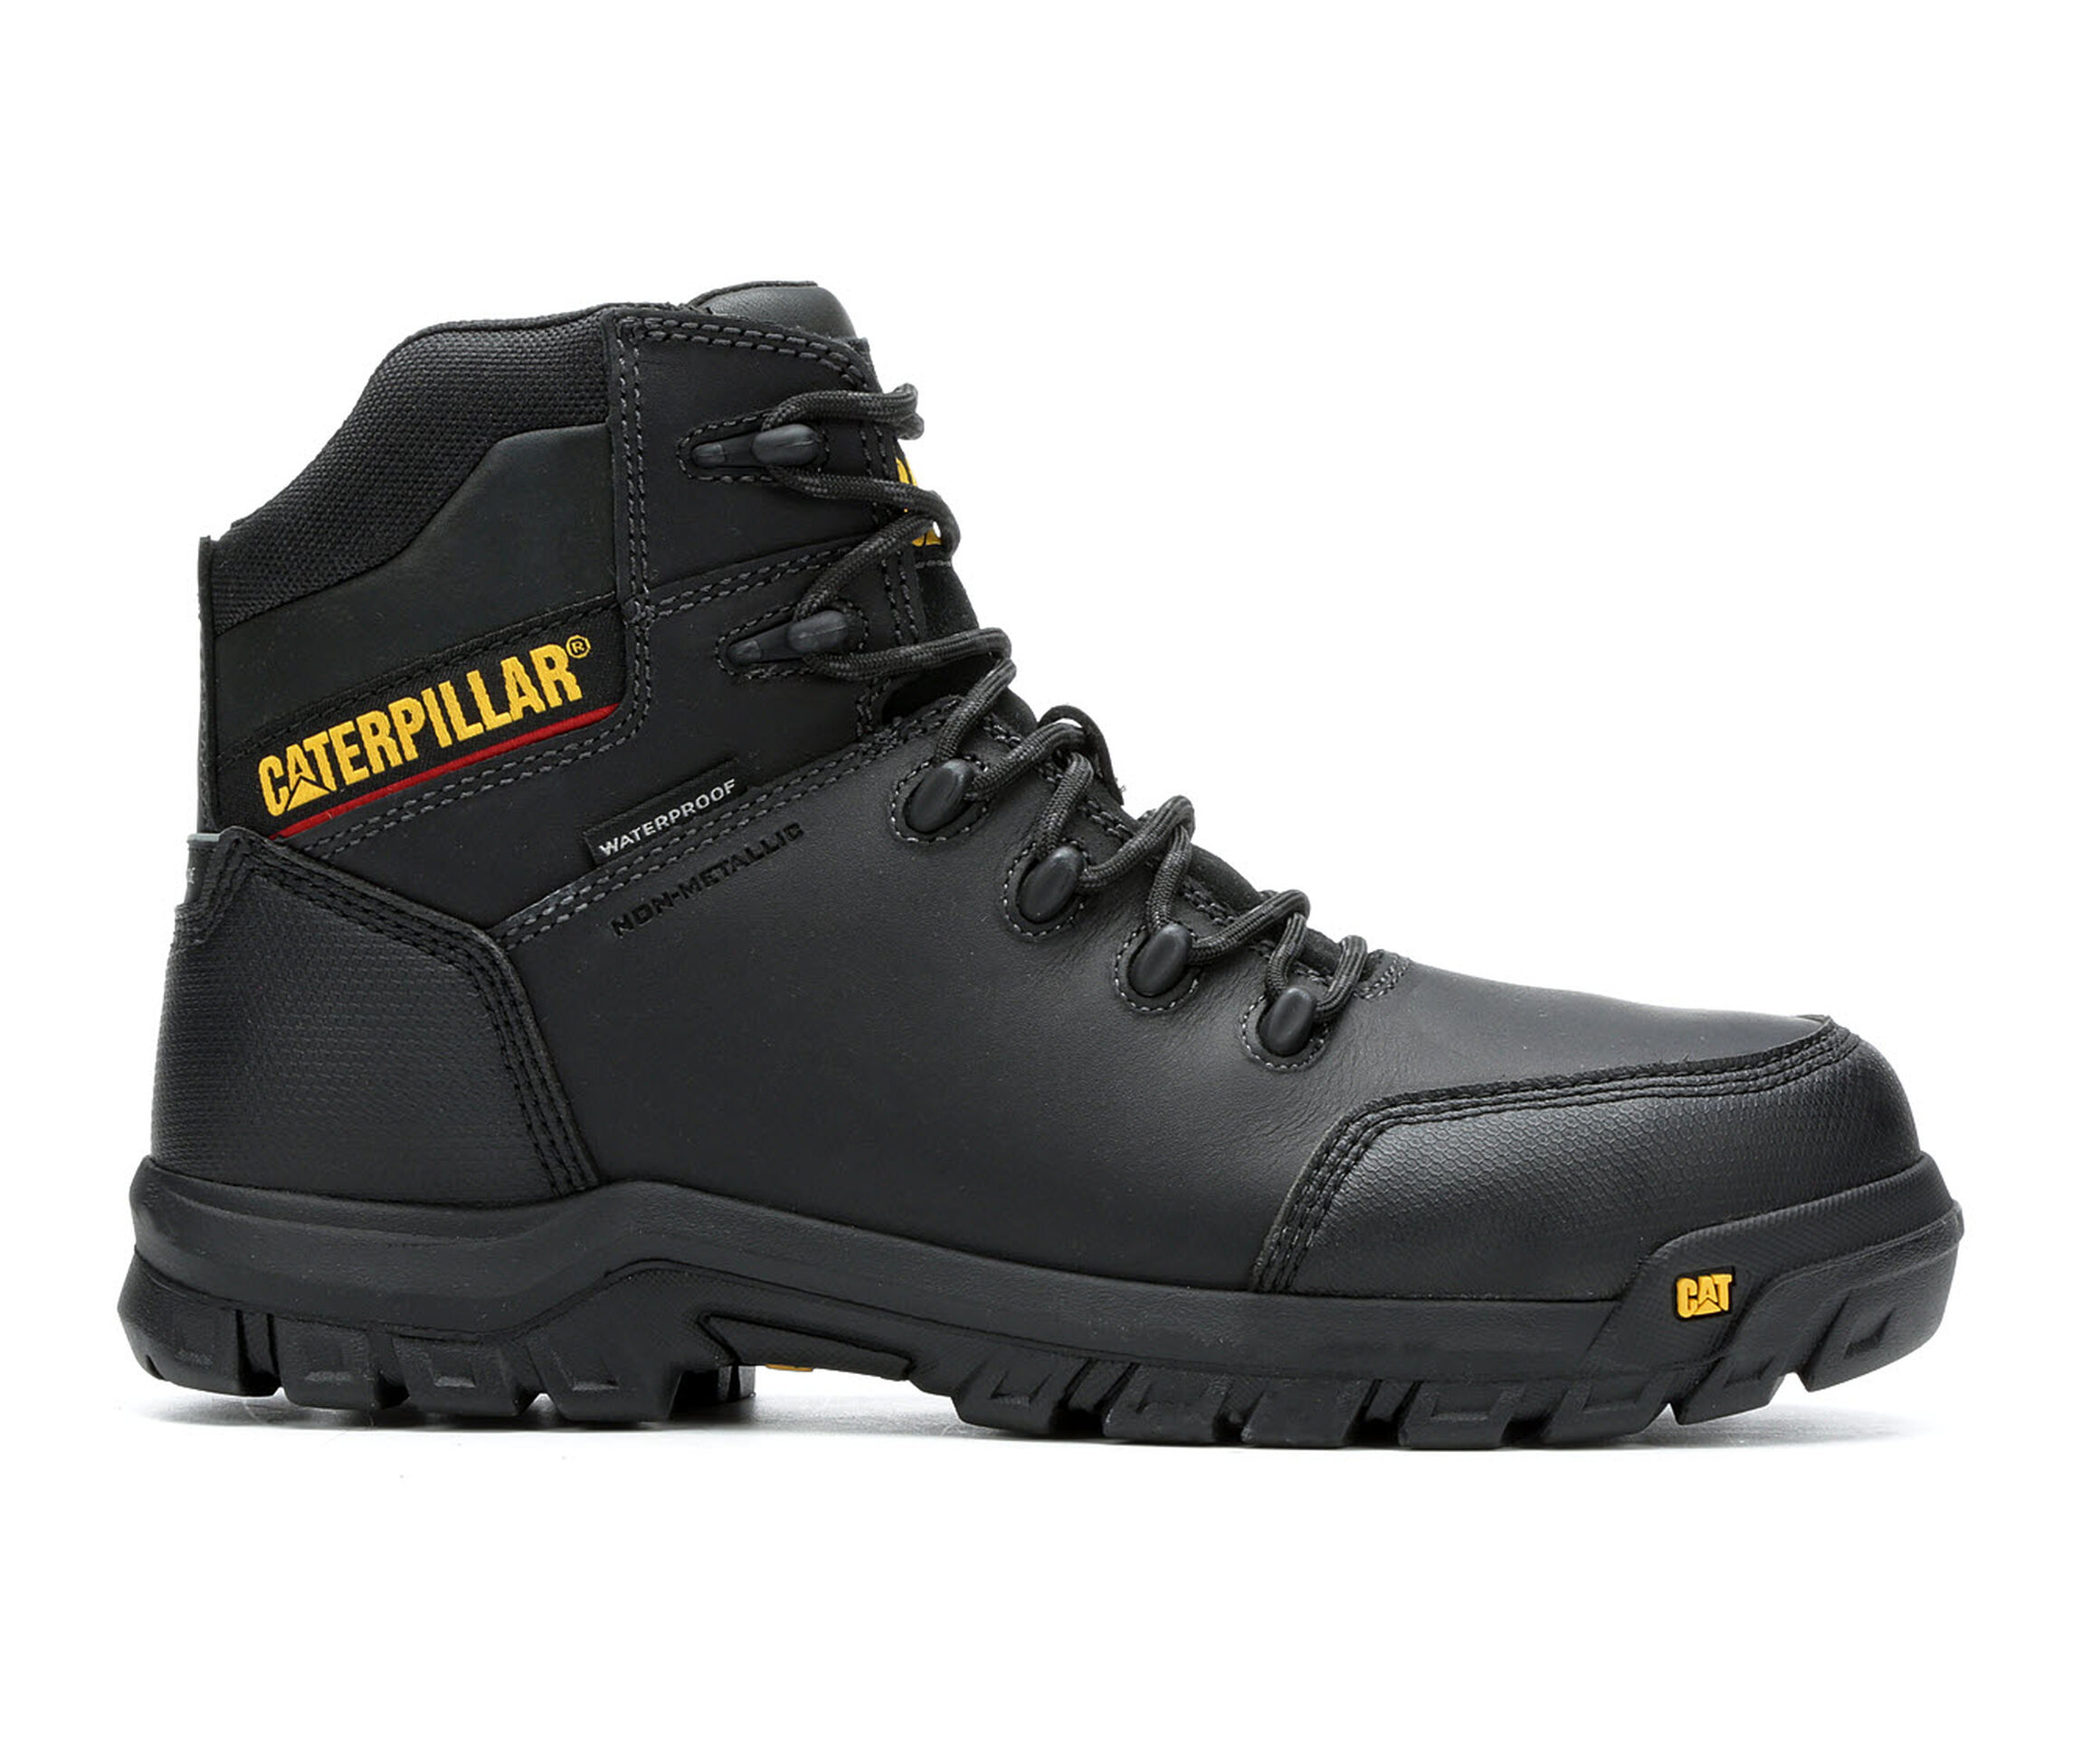 Caterpillar Resorption Waterprrof Comp Toe Men's Boots (Black Leather)